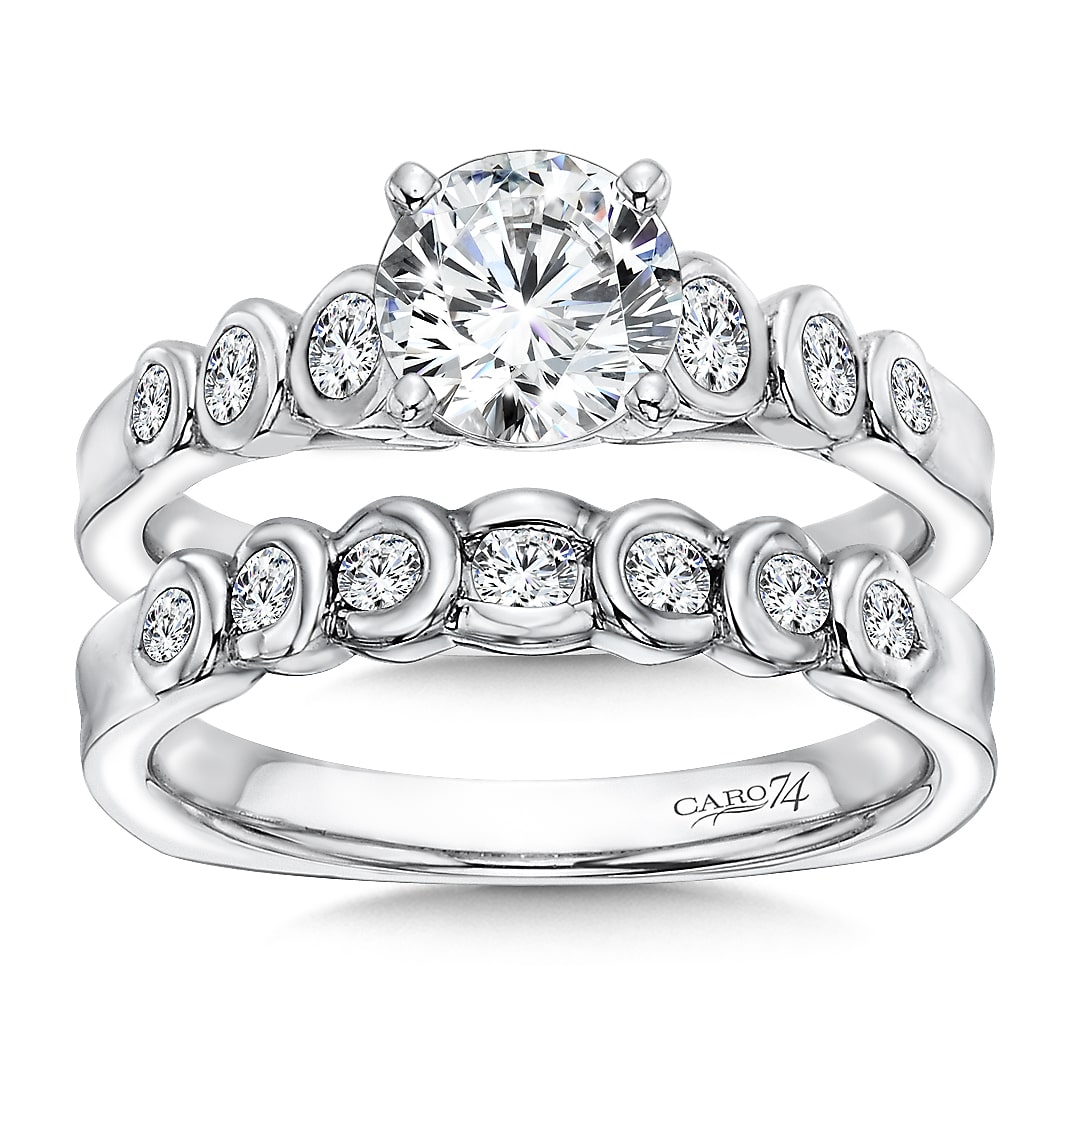 Wholesale Diamonds Dallas - Custom Exlcusive Engagement Rings Dallas